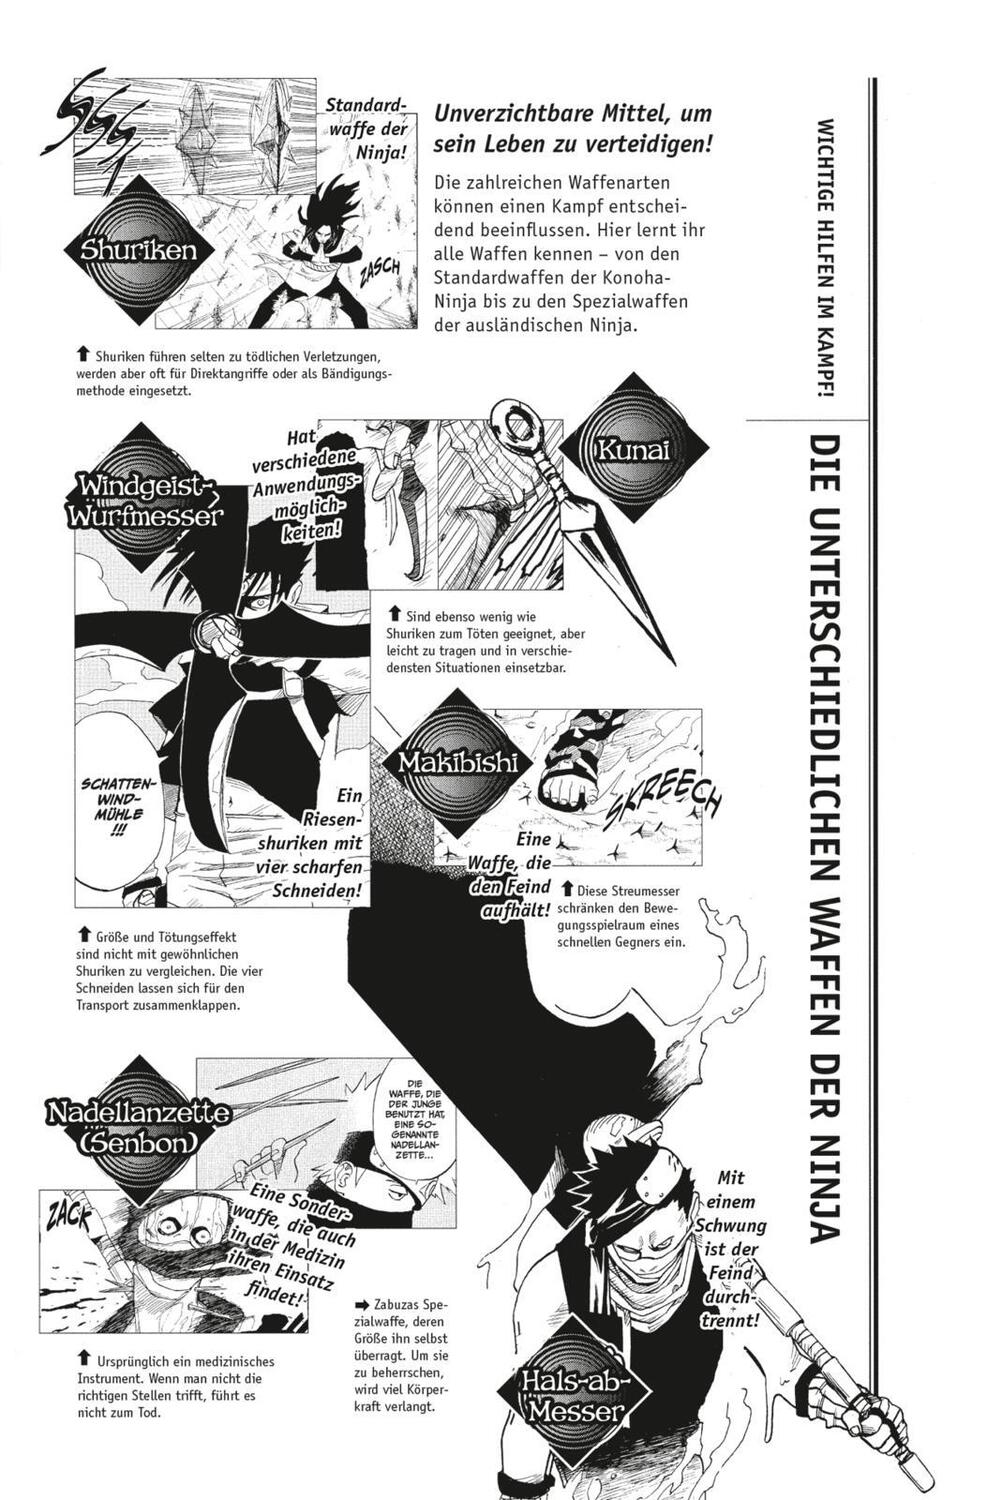 Bild: 9783551025975 | Naruto - Die Schriften des Hyo (Neuedition) | Masashi Kishimoto | Buch